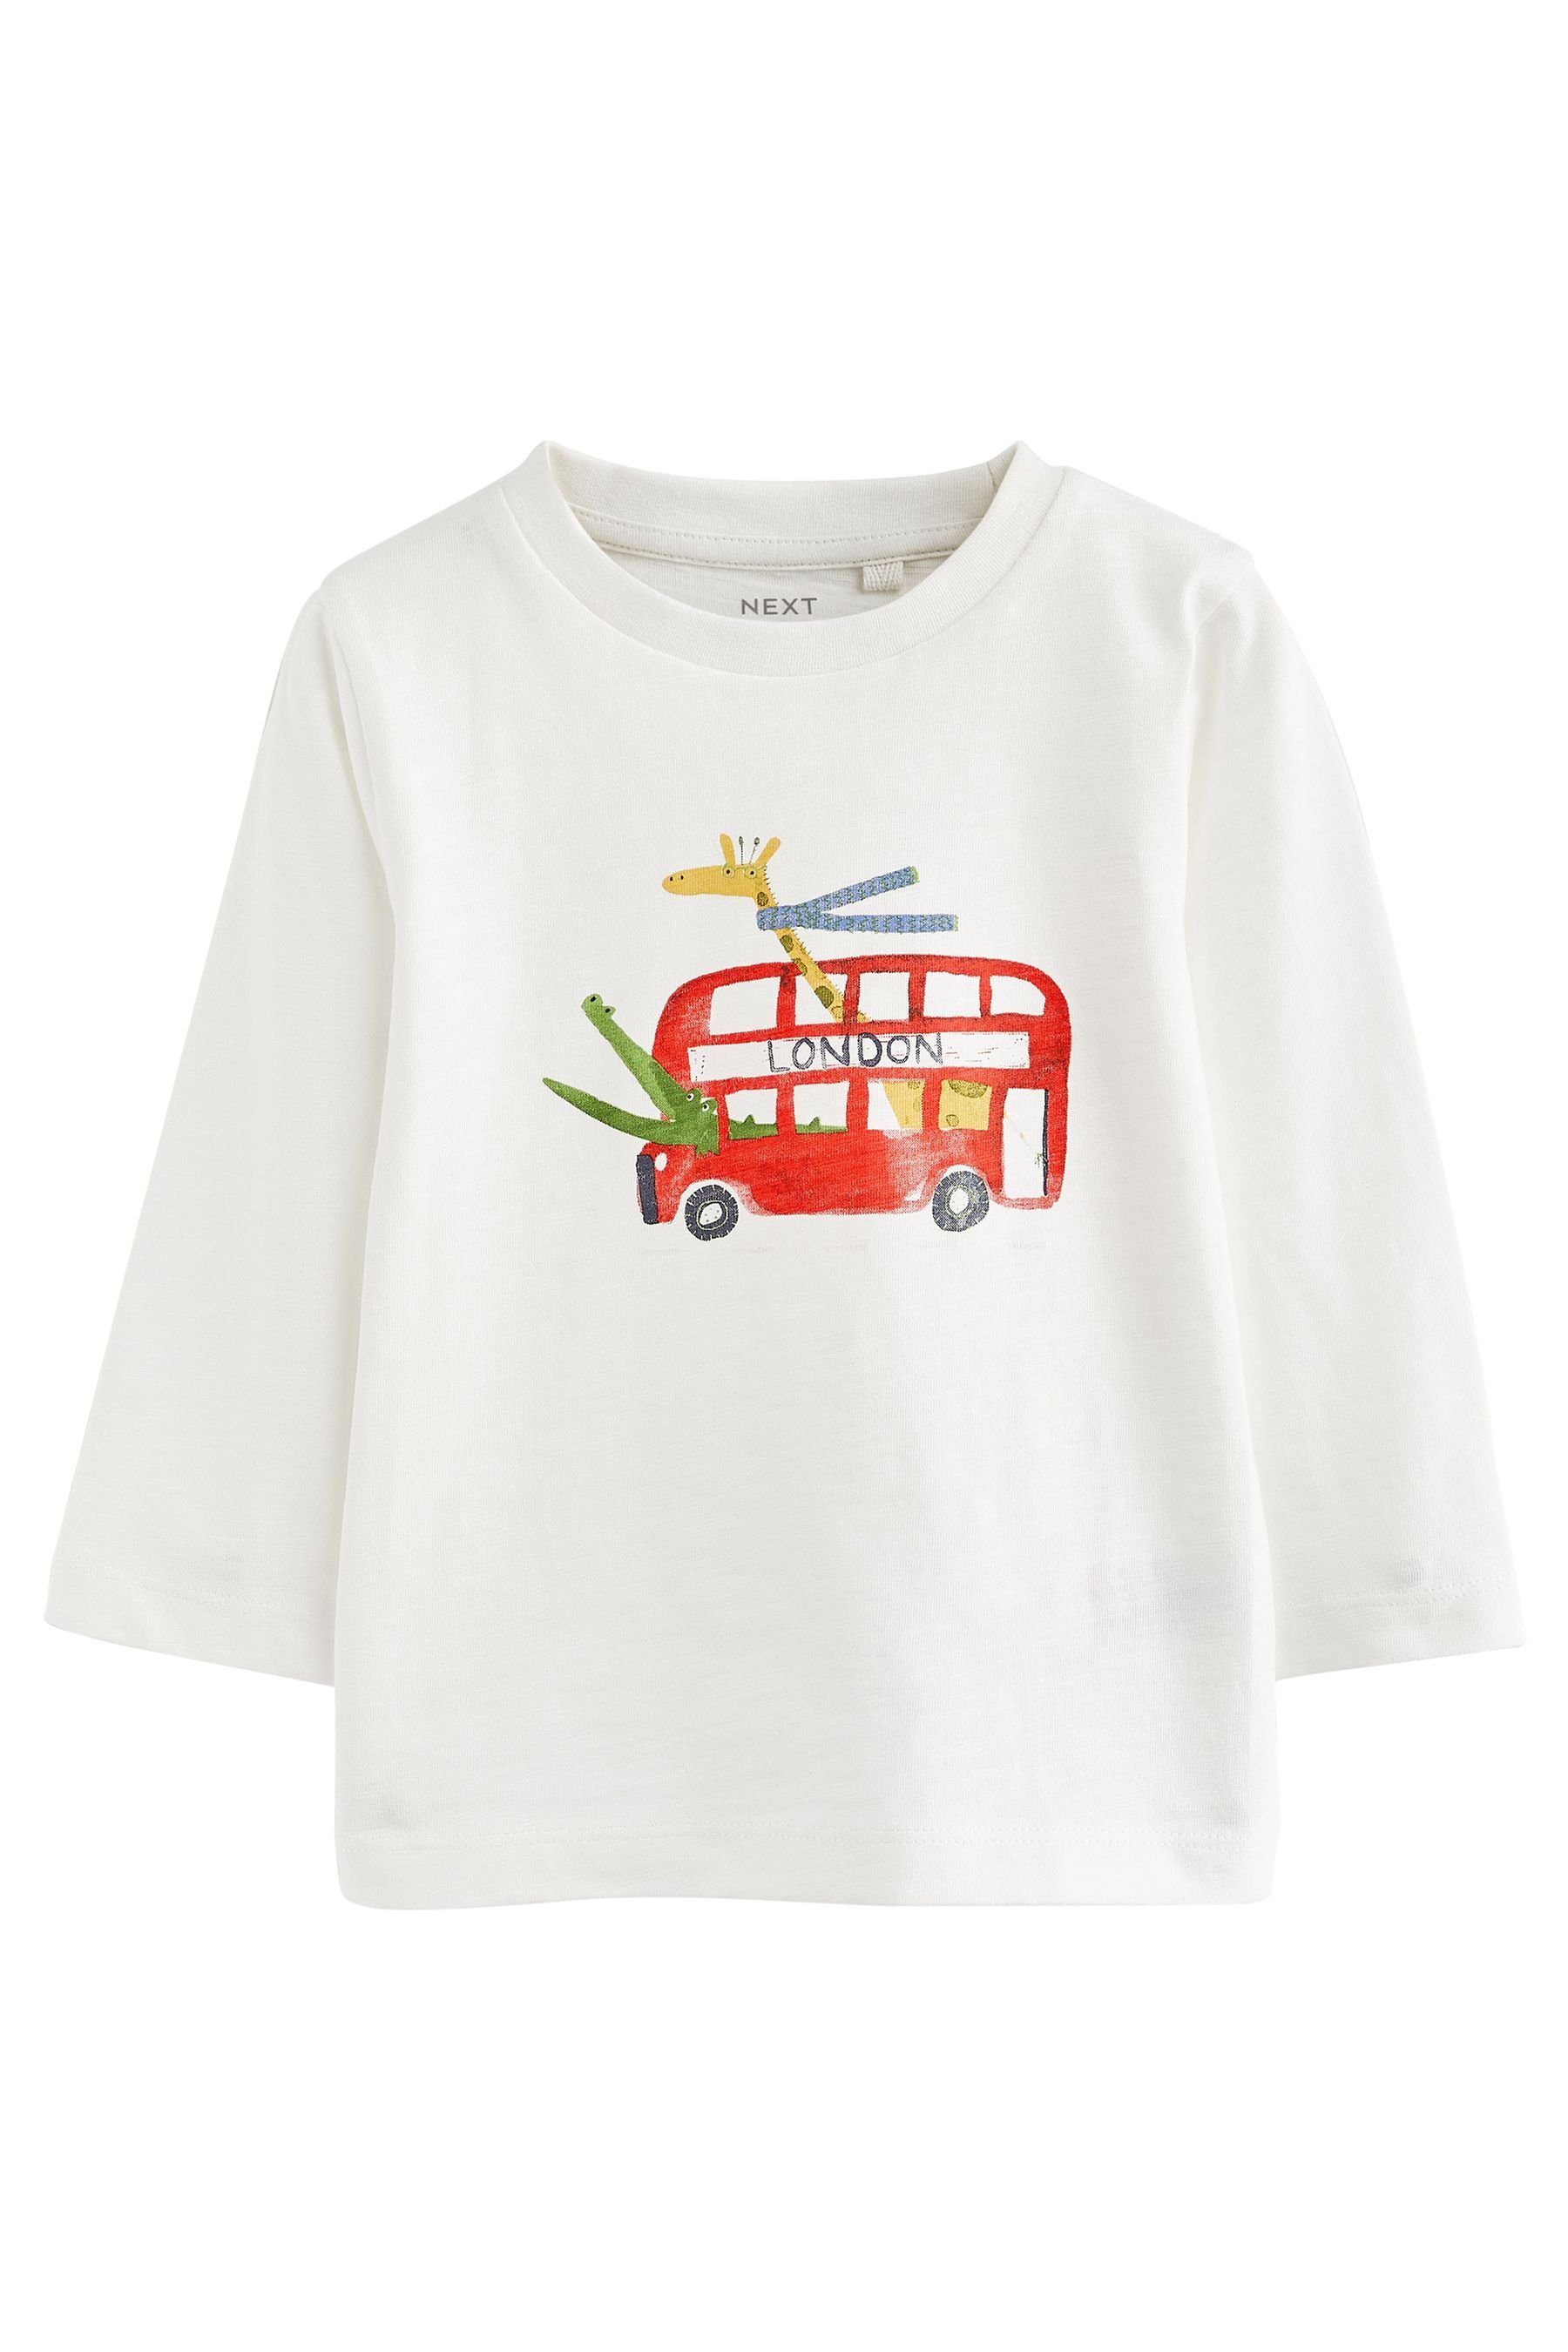 mit Langärmelige Langarmshirt Bus London im 3er-Pack (3-tlg) Next Figurenmotiv Shirts Blue/White